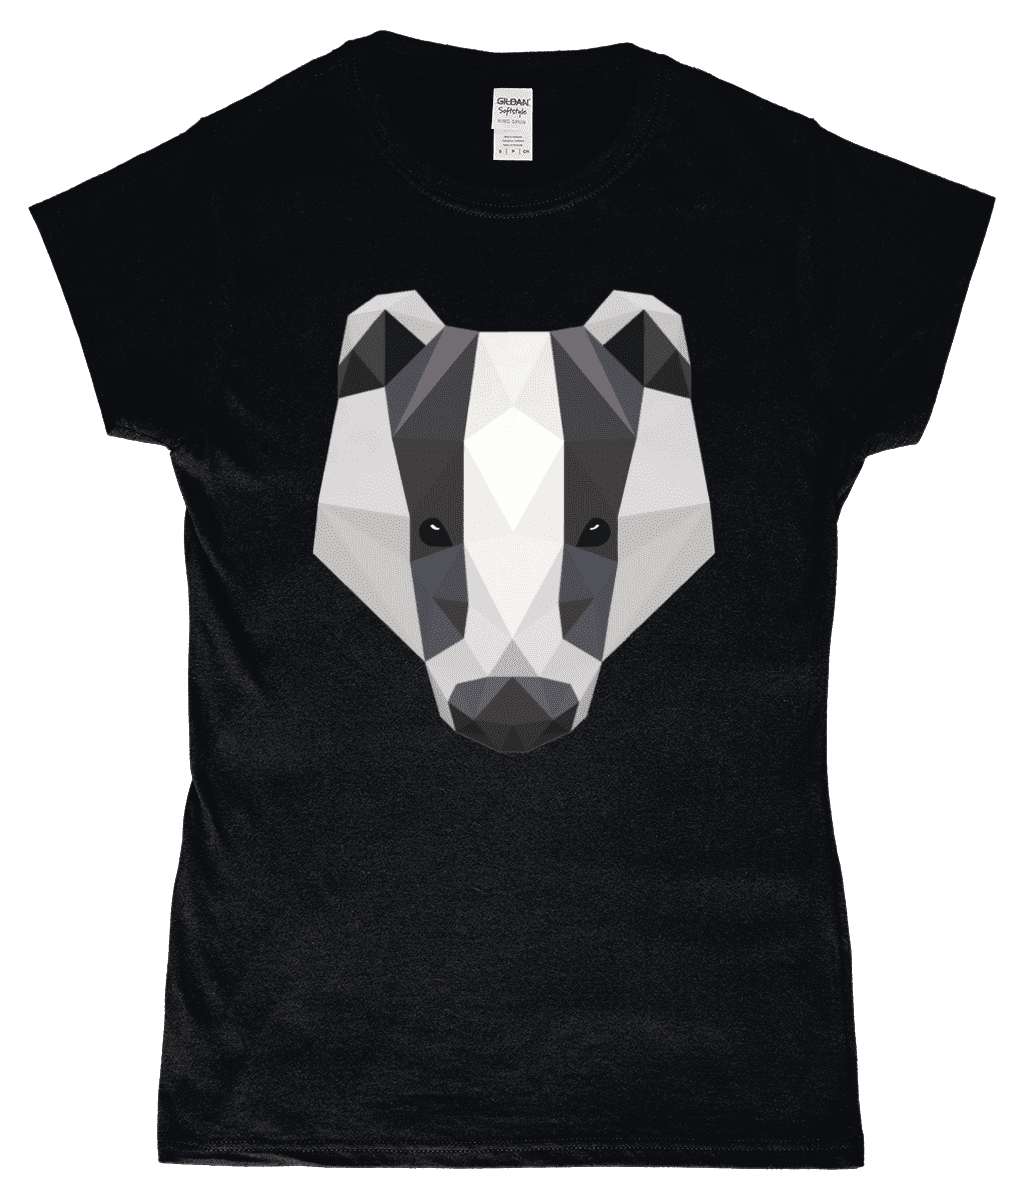 low Poly Badger British Wildlife Women's T-Shirt Black